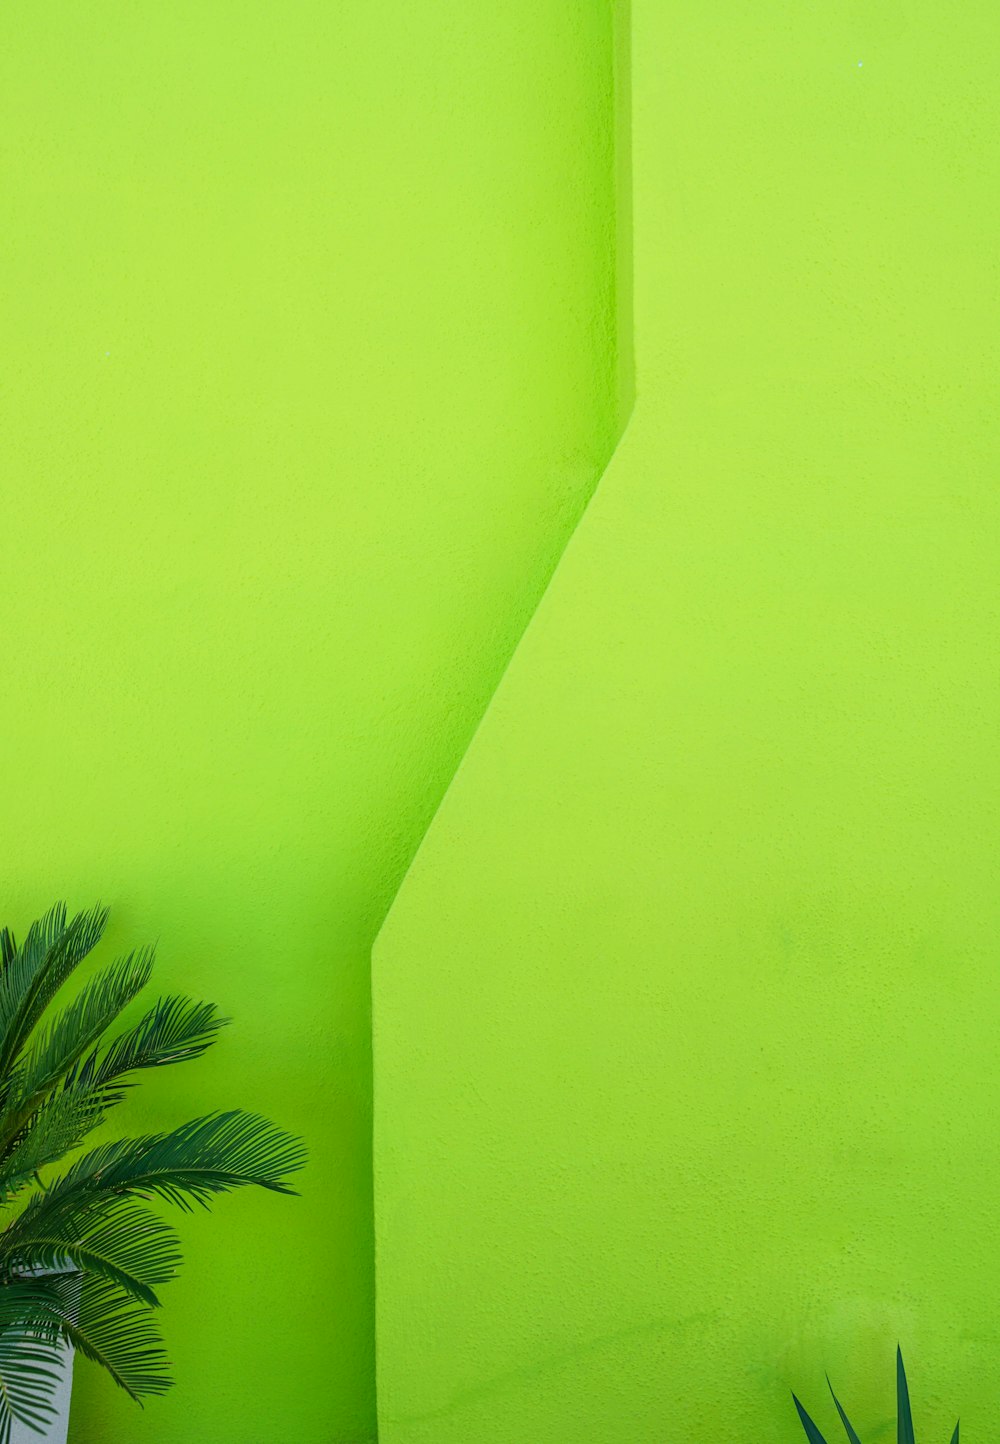 green palm tree beside green wall